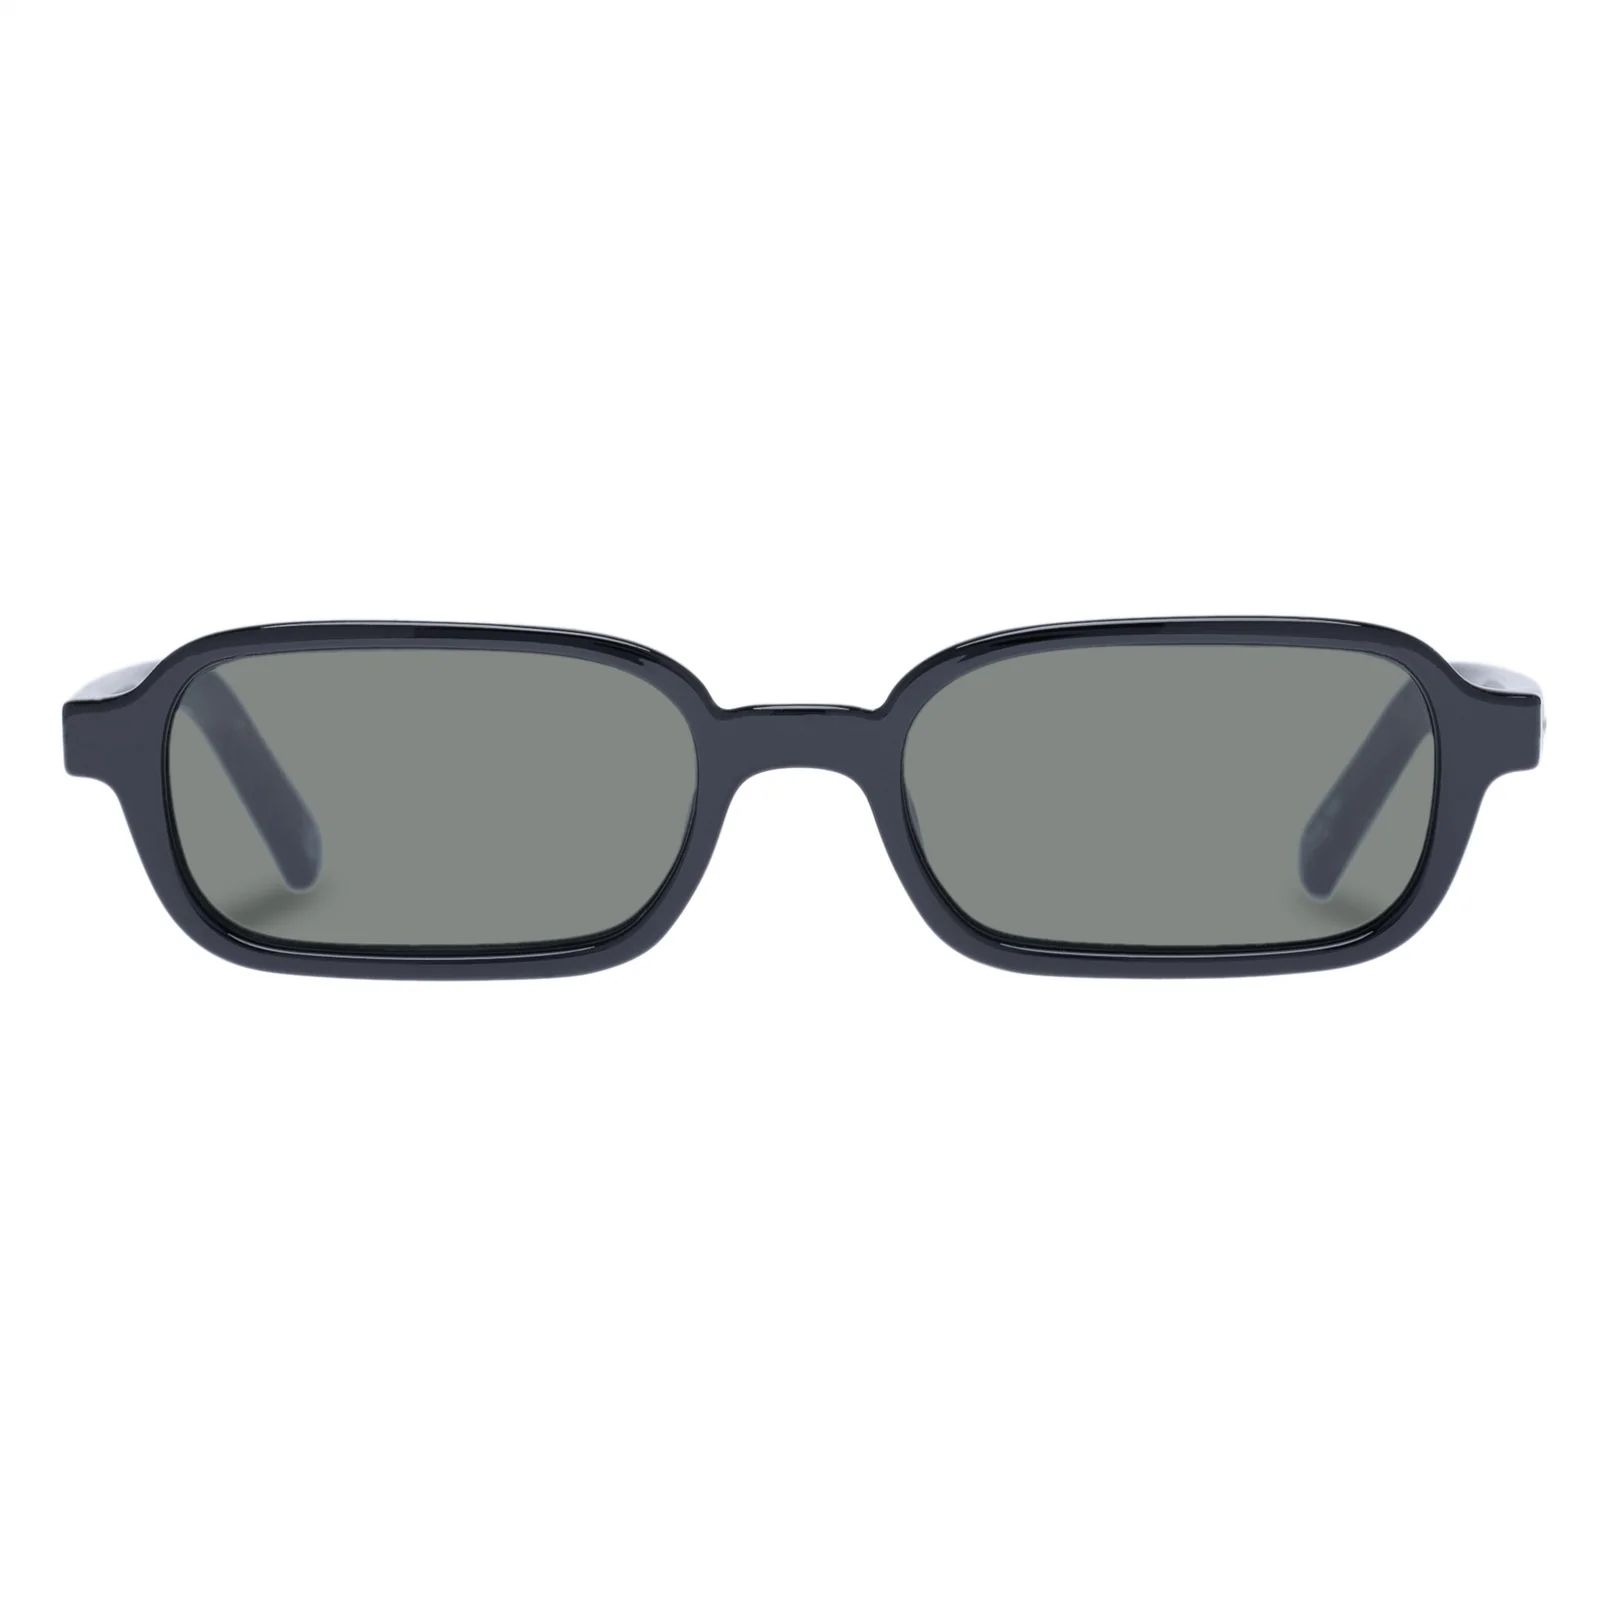 PILFERER | BLACK | Le Specs (Sunglasses)